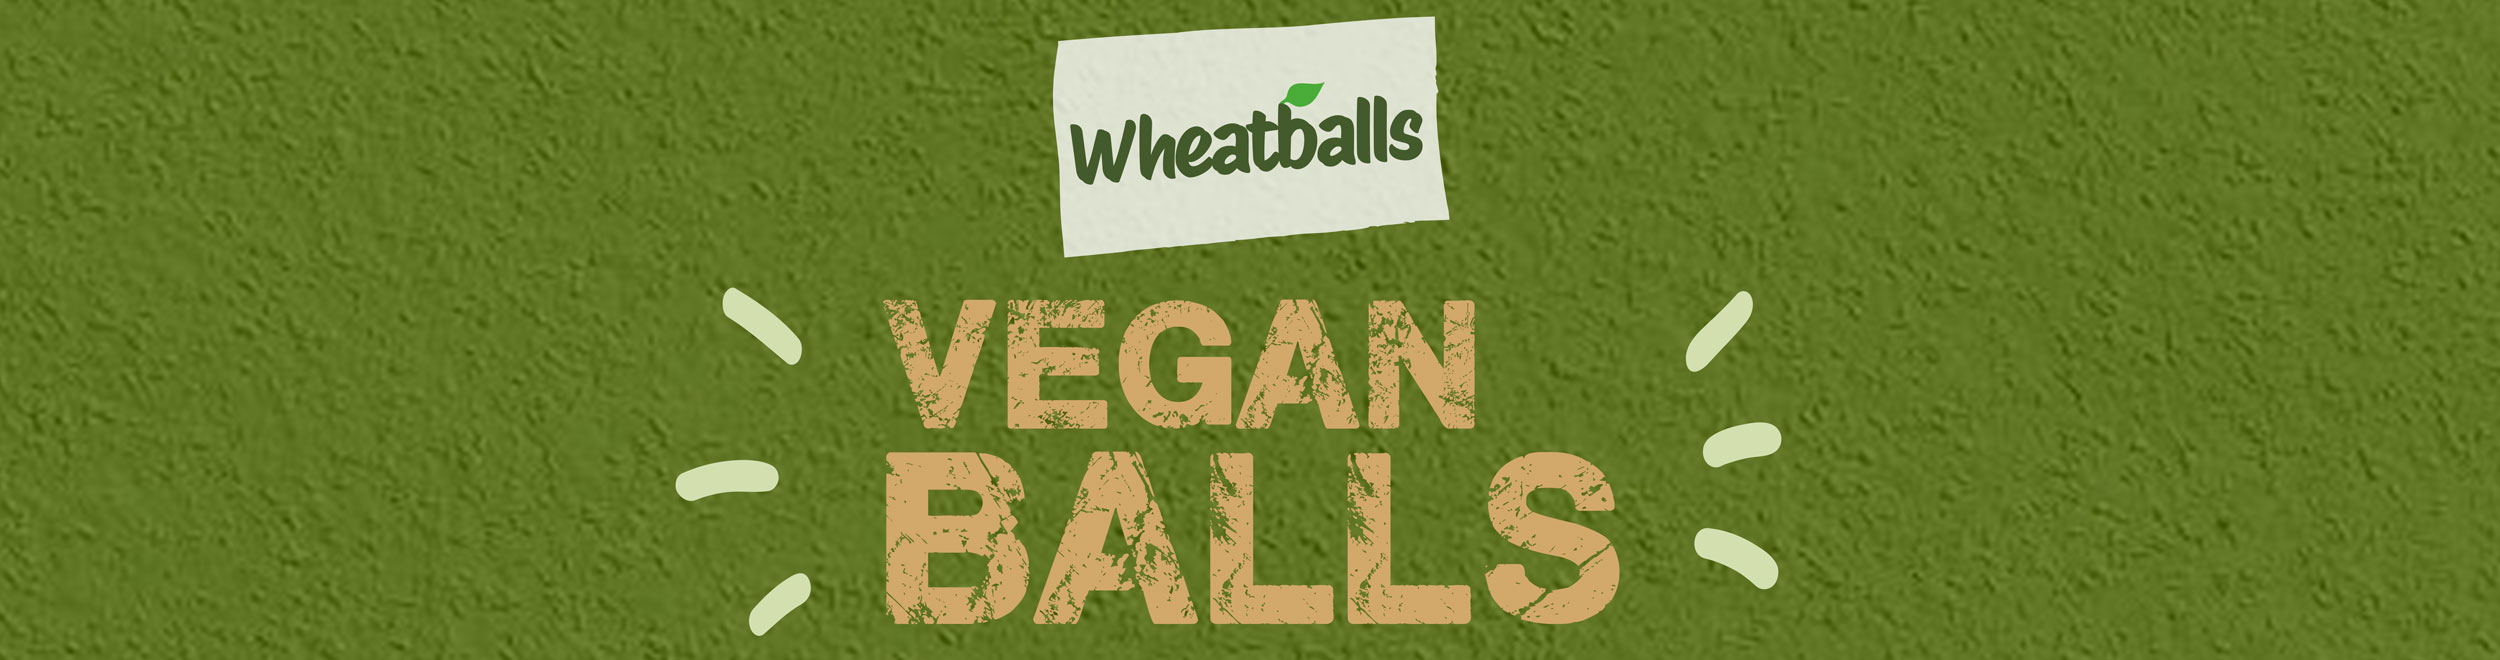 Wheatballs-Vegan-Balls-Header_2